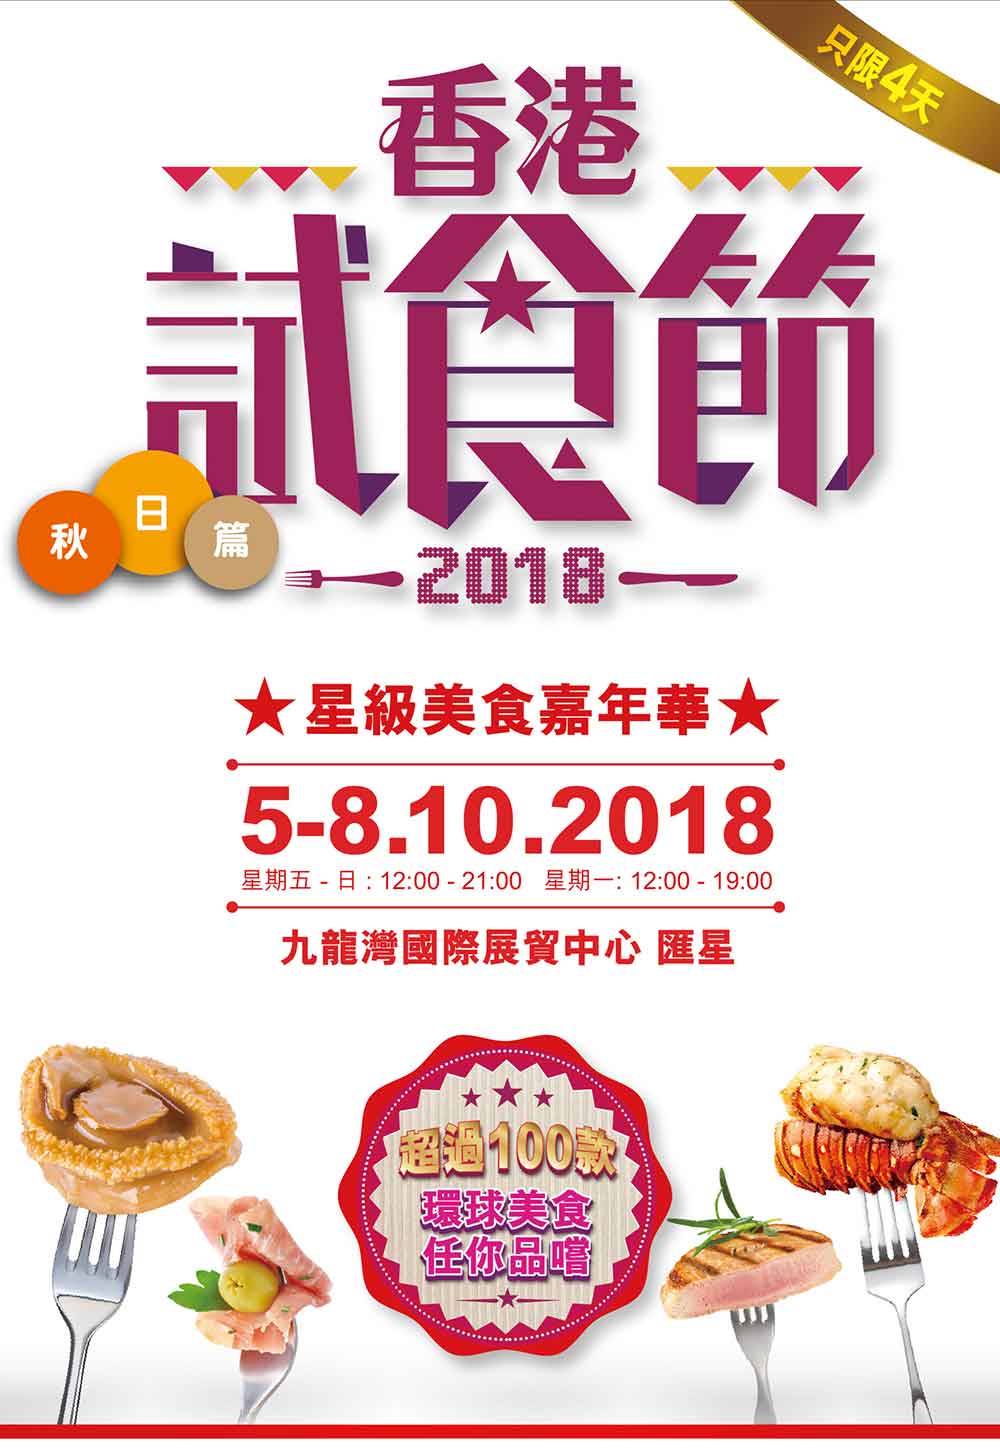 Hong Kong Food Tasting Festival 2018 (Autumn)